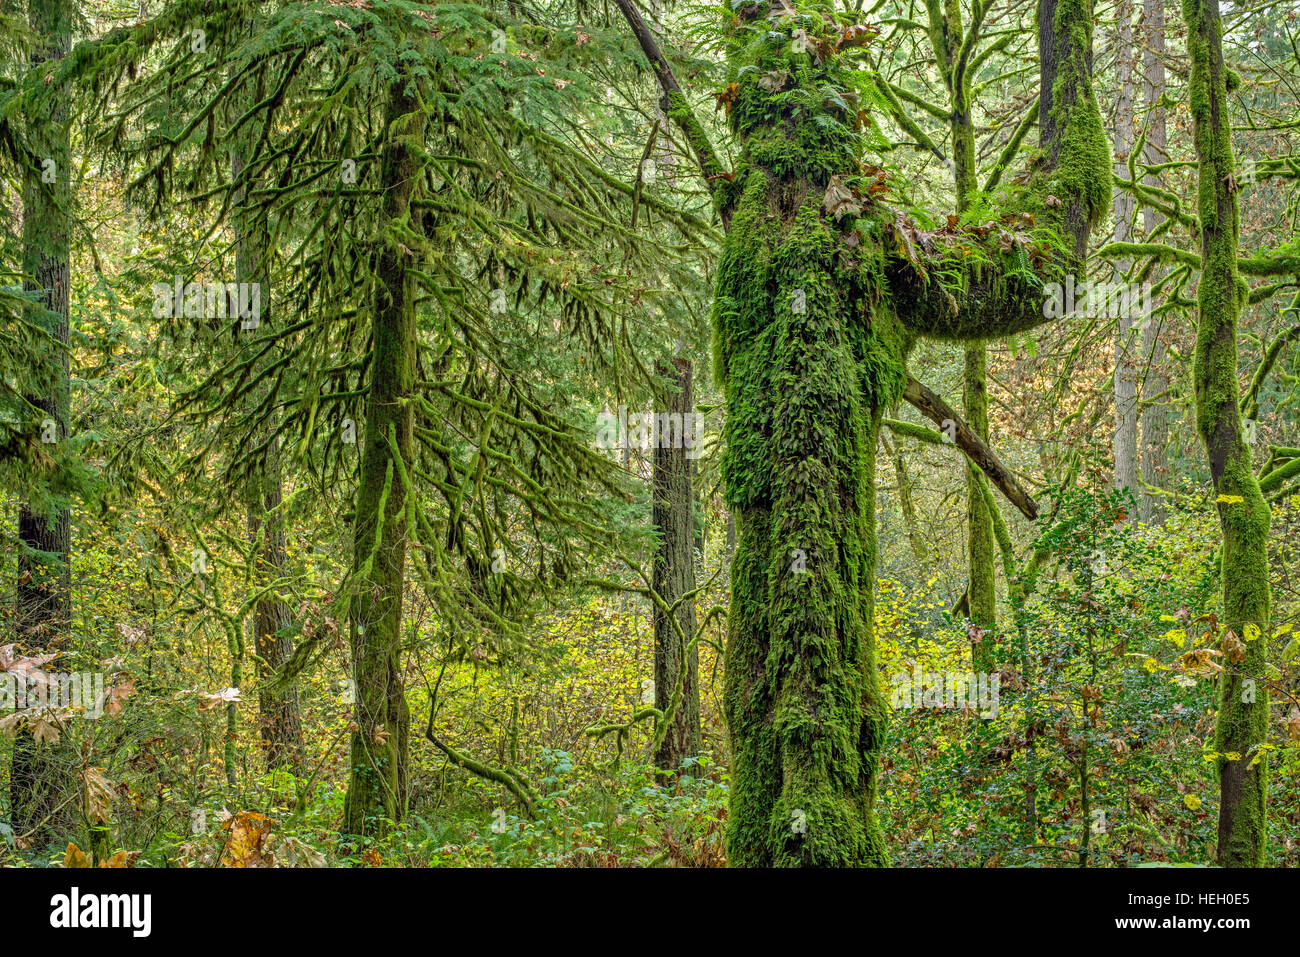 USA, Washington, Camas, Lacamas Park, Autumn forest with moss-covered bigleaf maple and western hemlock trees. Stock Photo